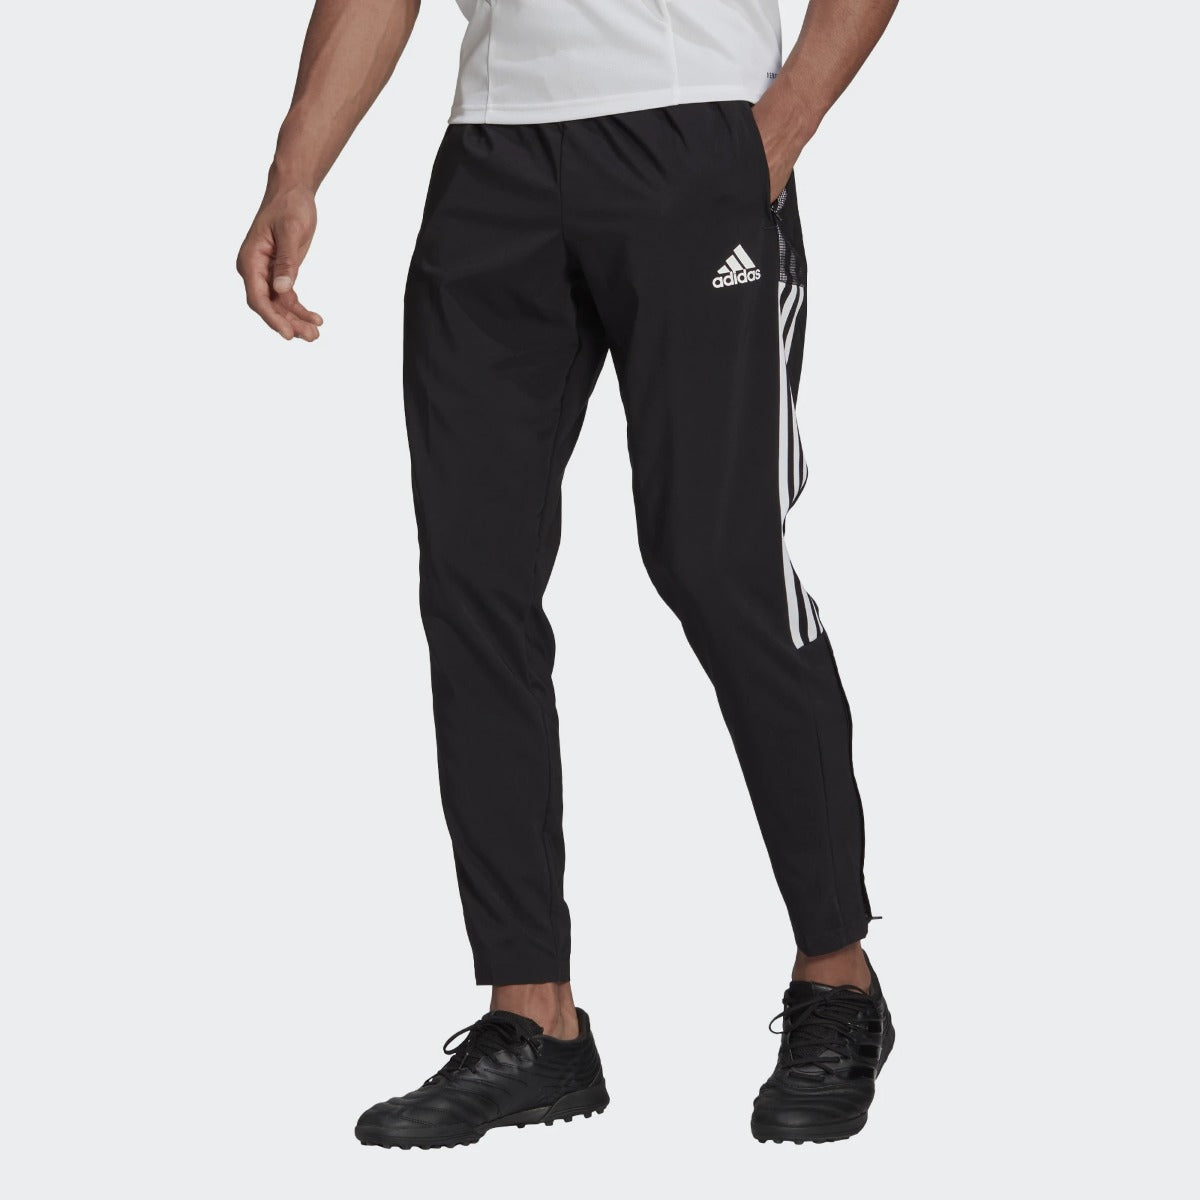 Pantalon de survêtement Adidas Tiro  - Noir/Blanc